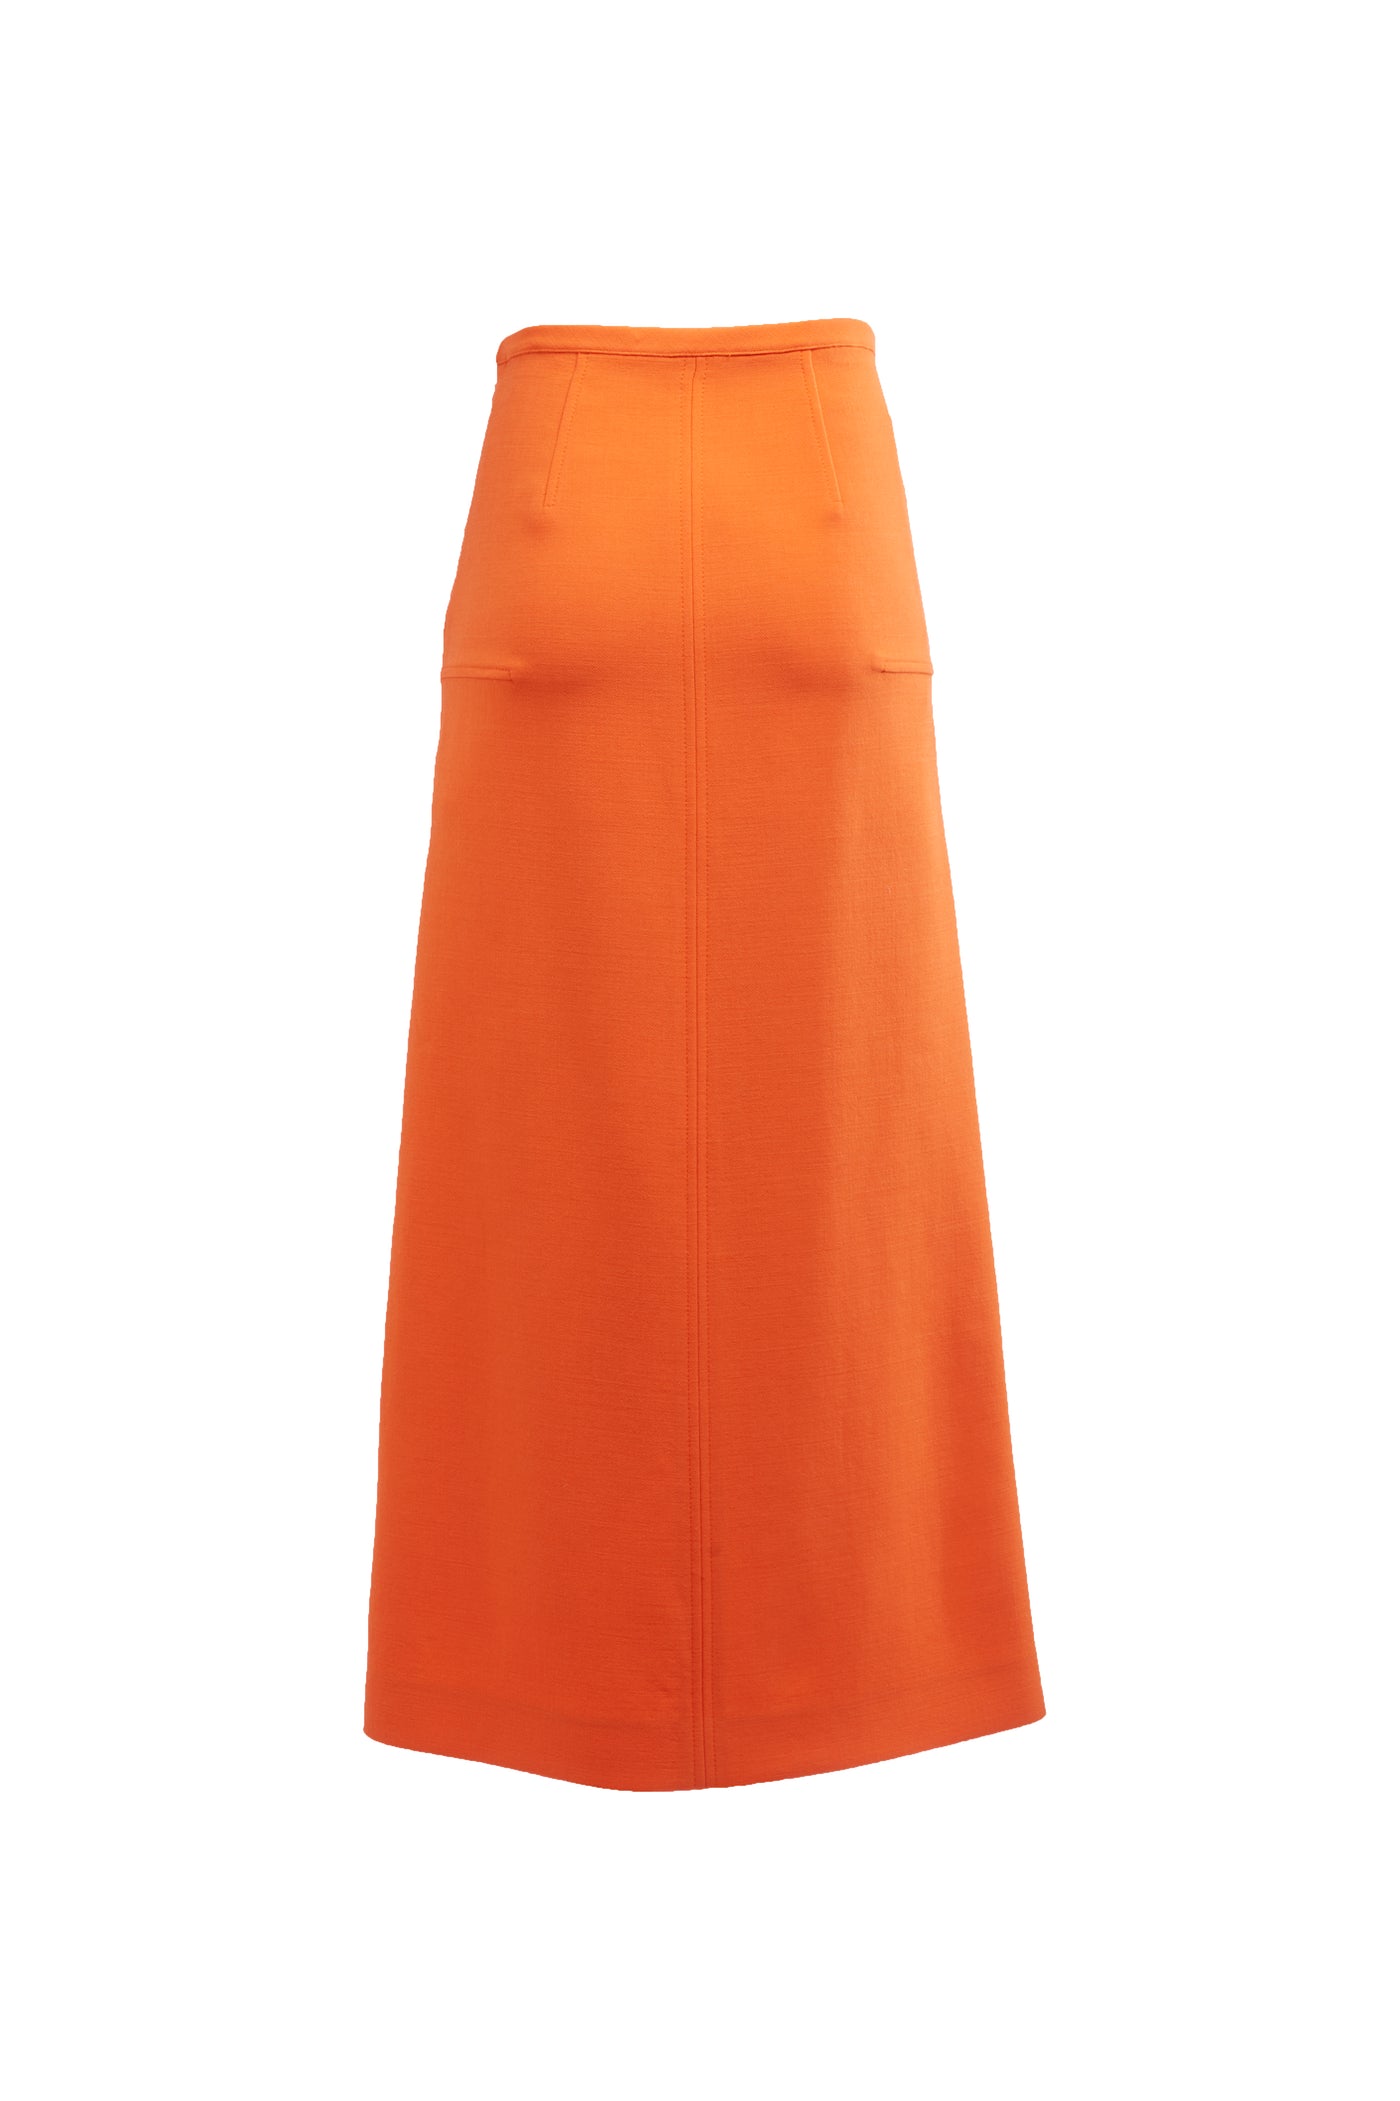 Minmin Peng - Camila Midi Skirt - Orange